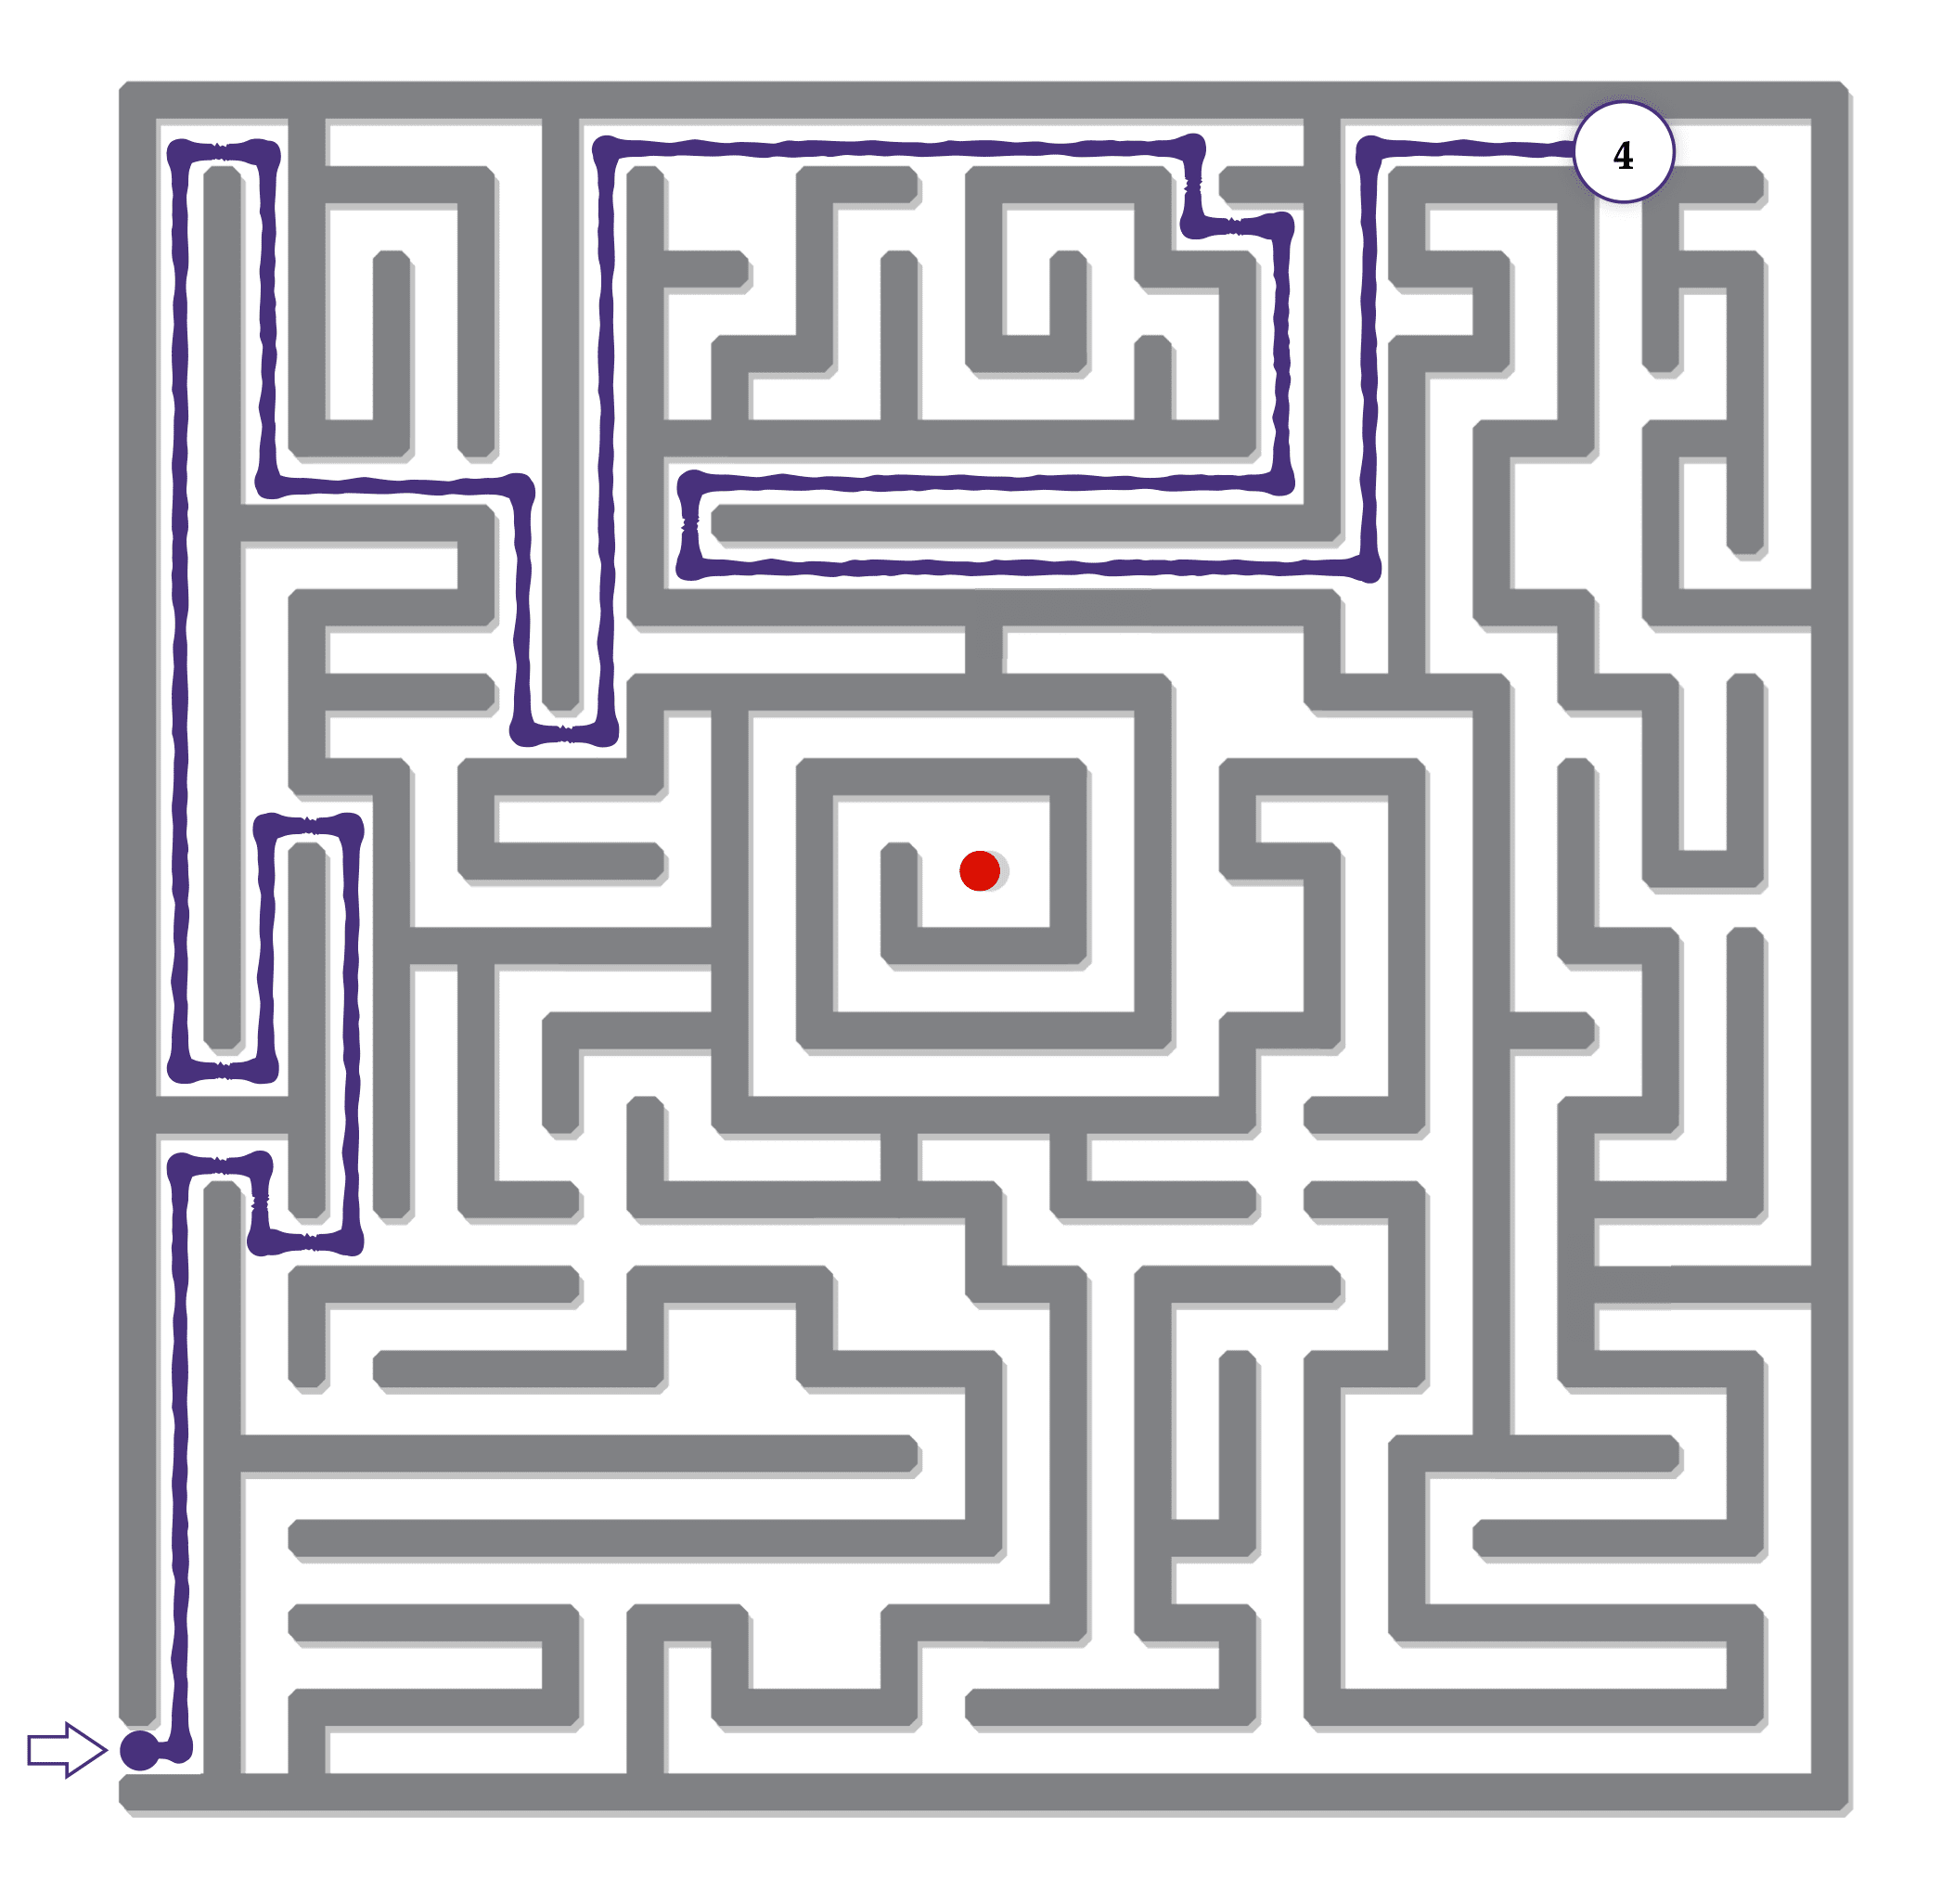 5345220 Maze step 4